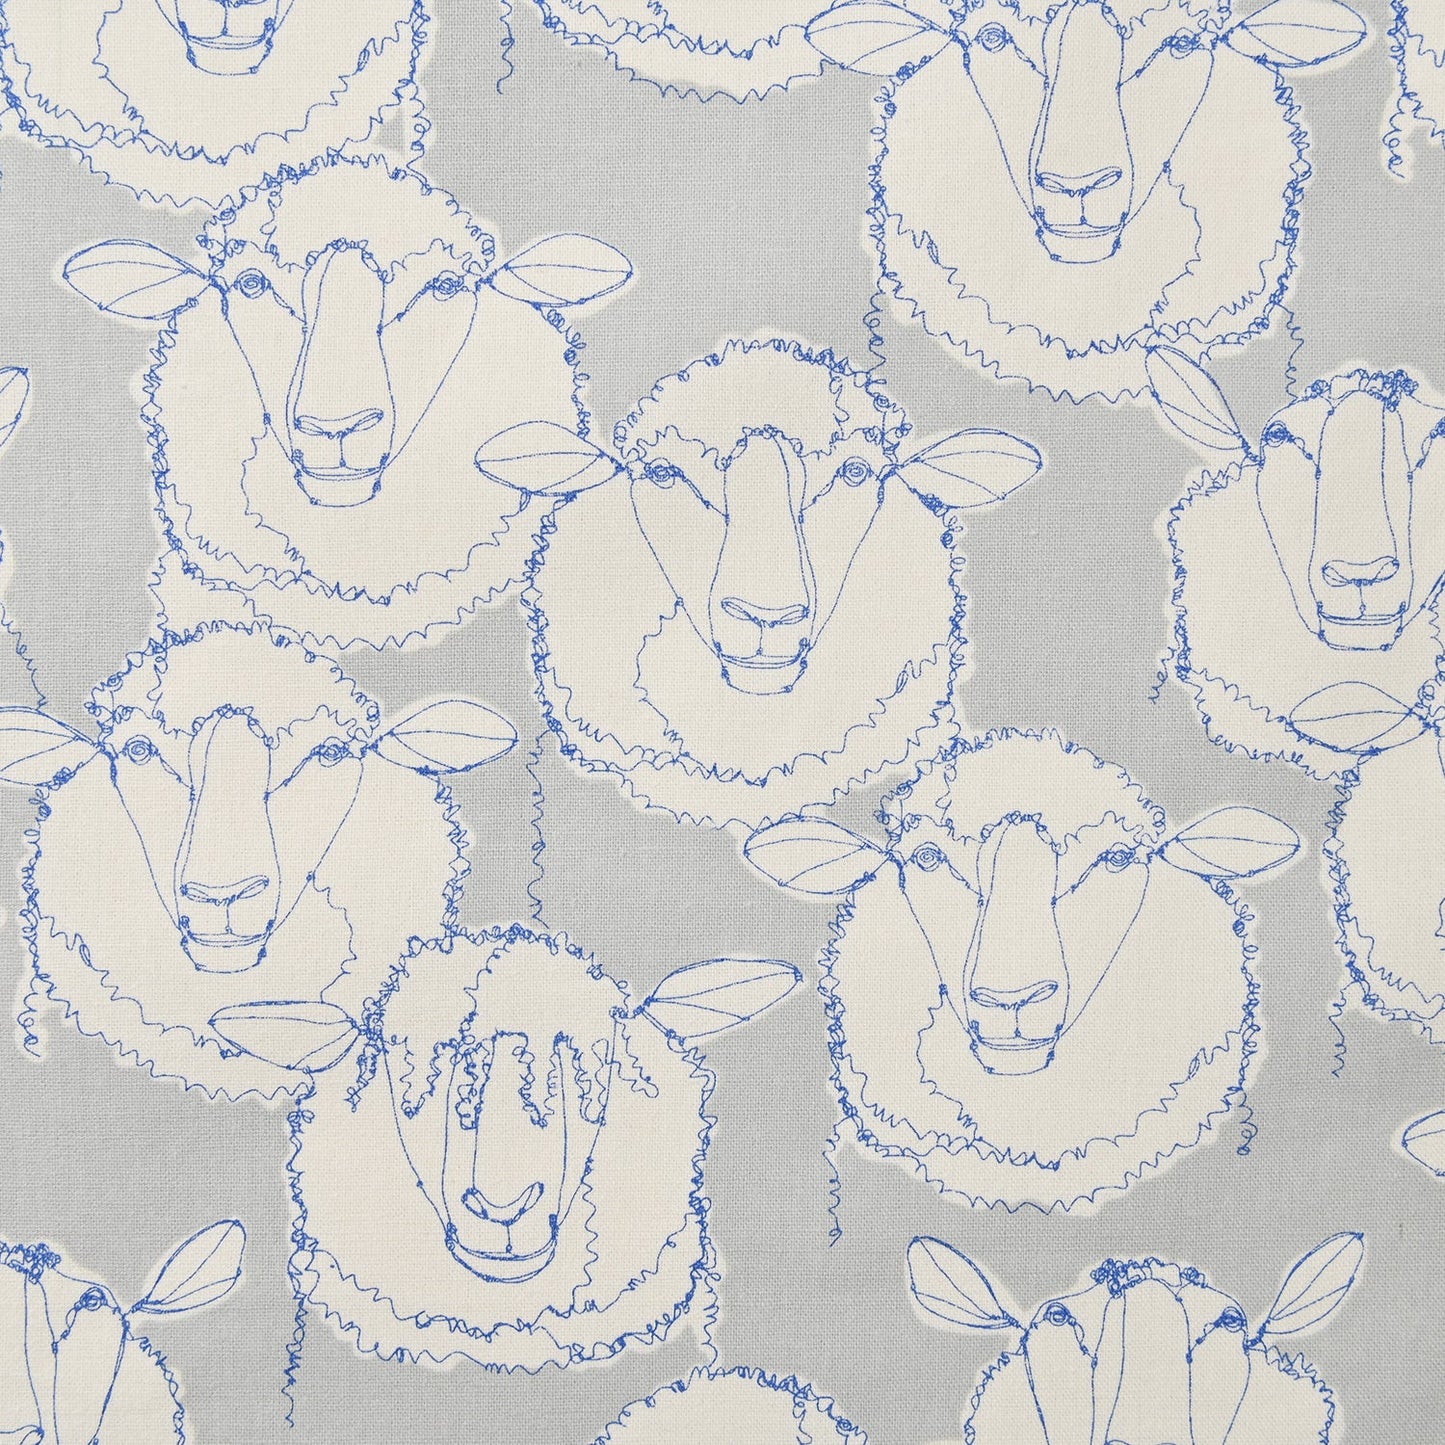 Hayu Fabric “Sheep ECanvas